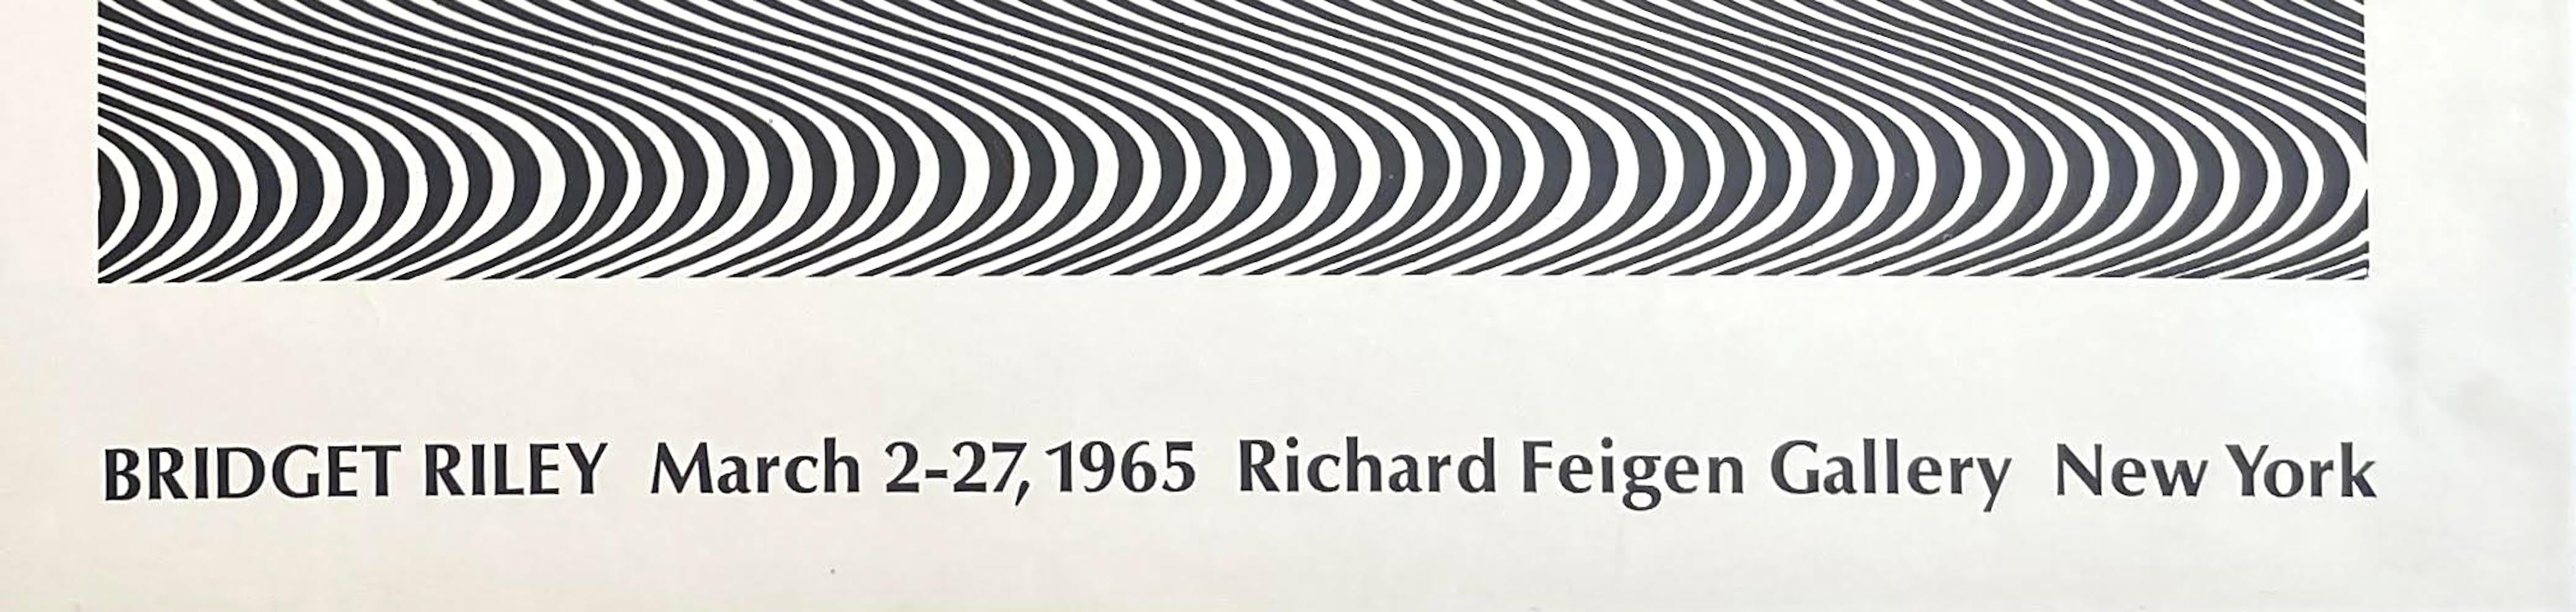 Affiche Op Art de Richard Feigen Gallery, 1965 - Print de Bridget Riley